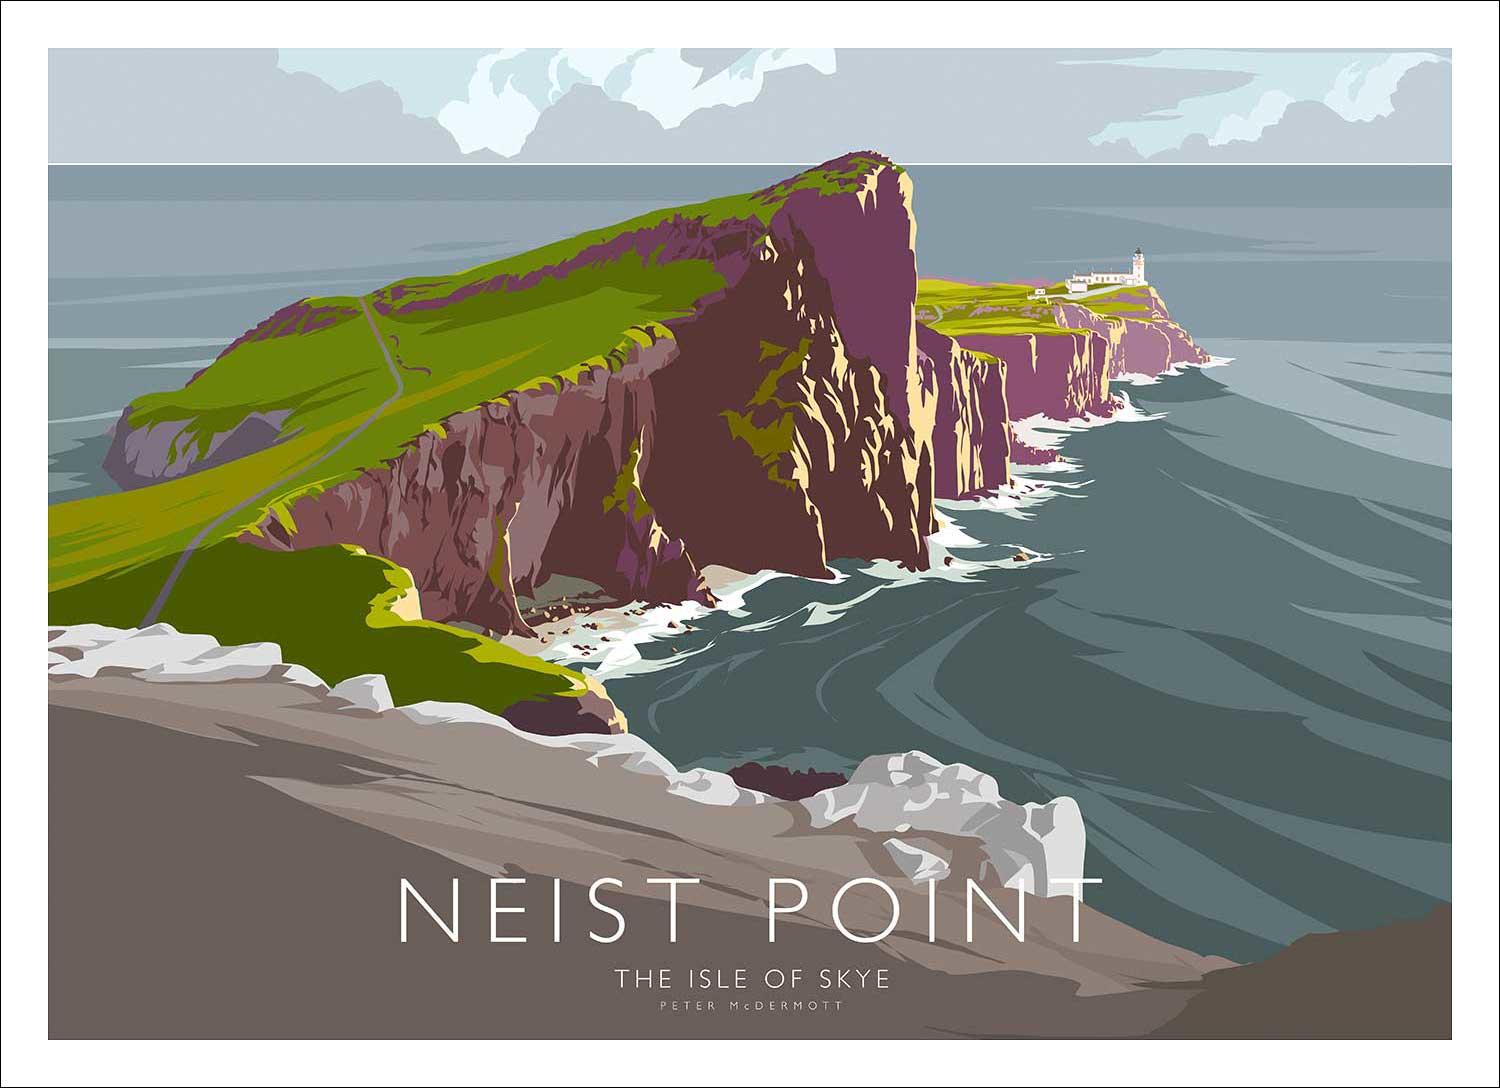 Neist Point Art Print from an original illustration by artist Peter McDermott